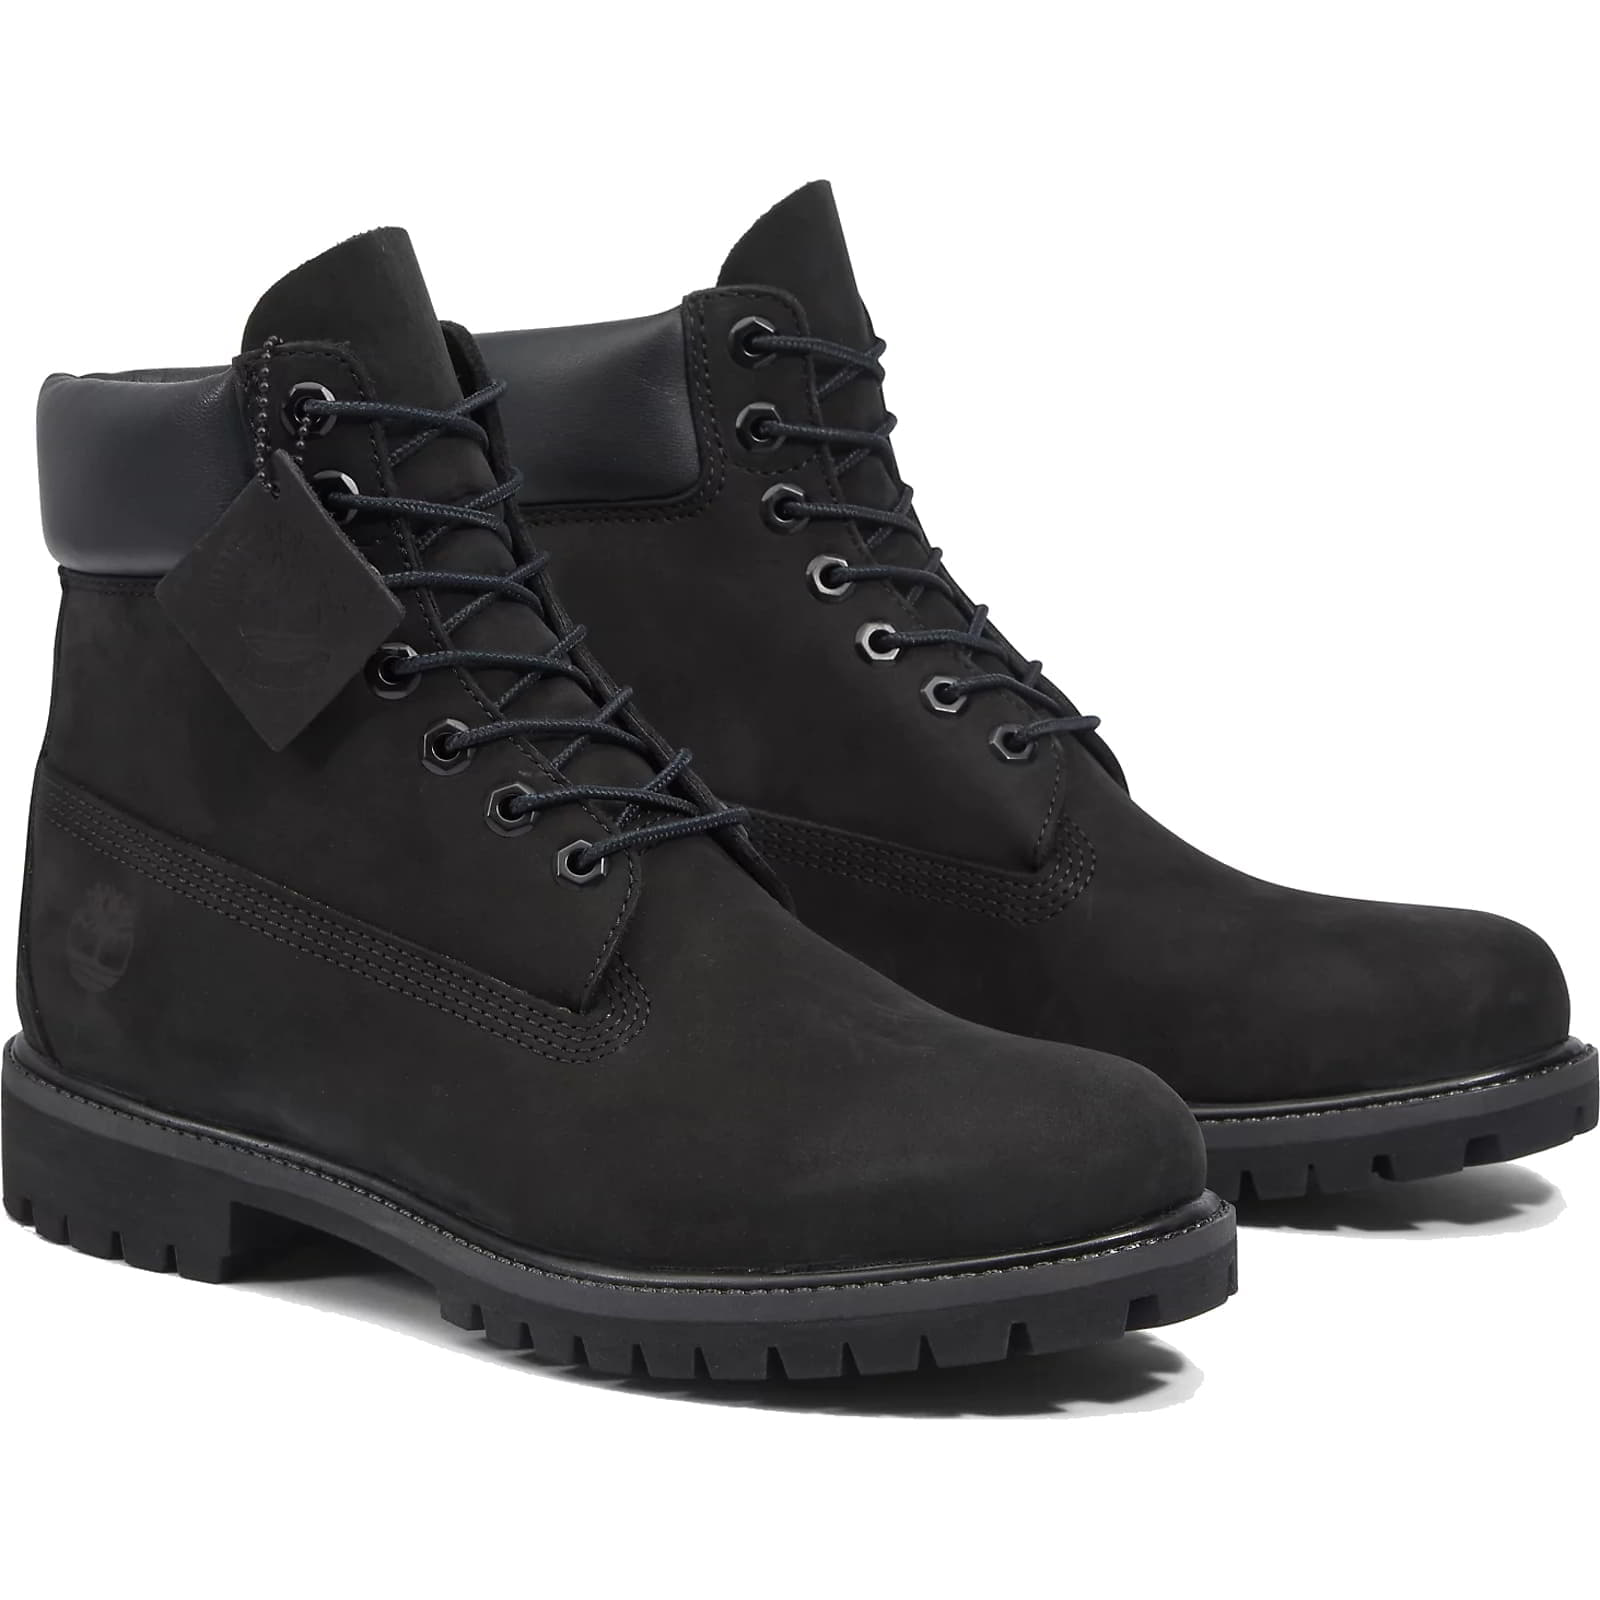 Timberland Men's 6 Inch Premium Black Classic Wide Fit Waterproof Boots - UK 9.5